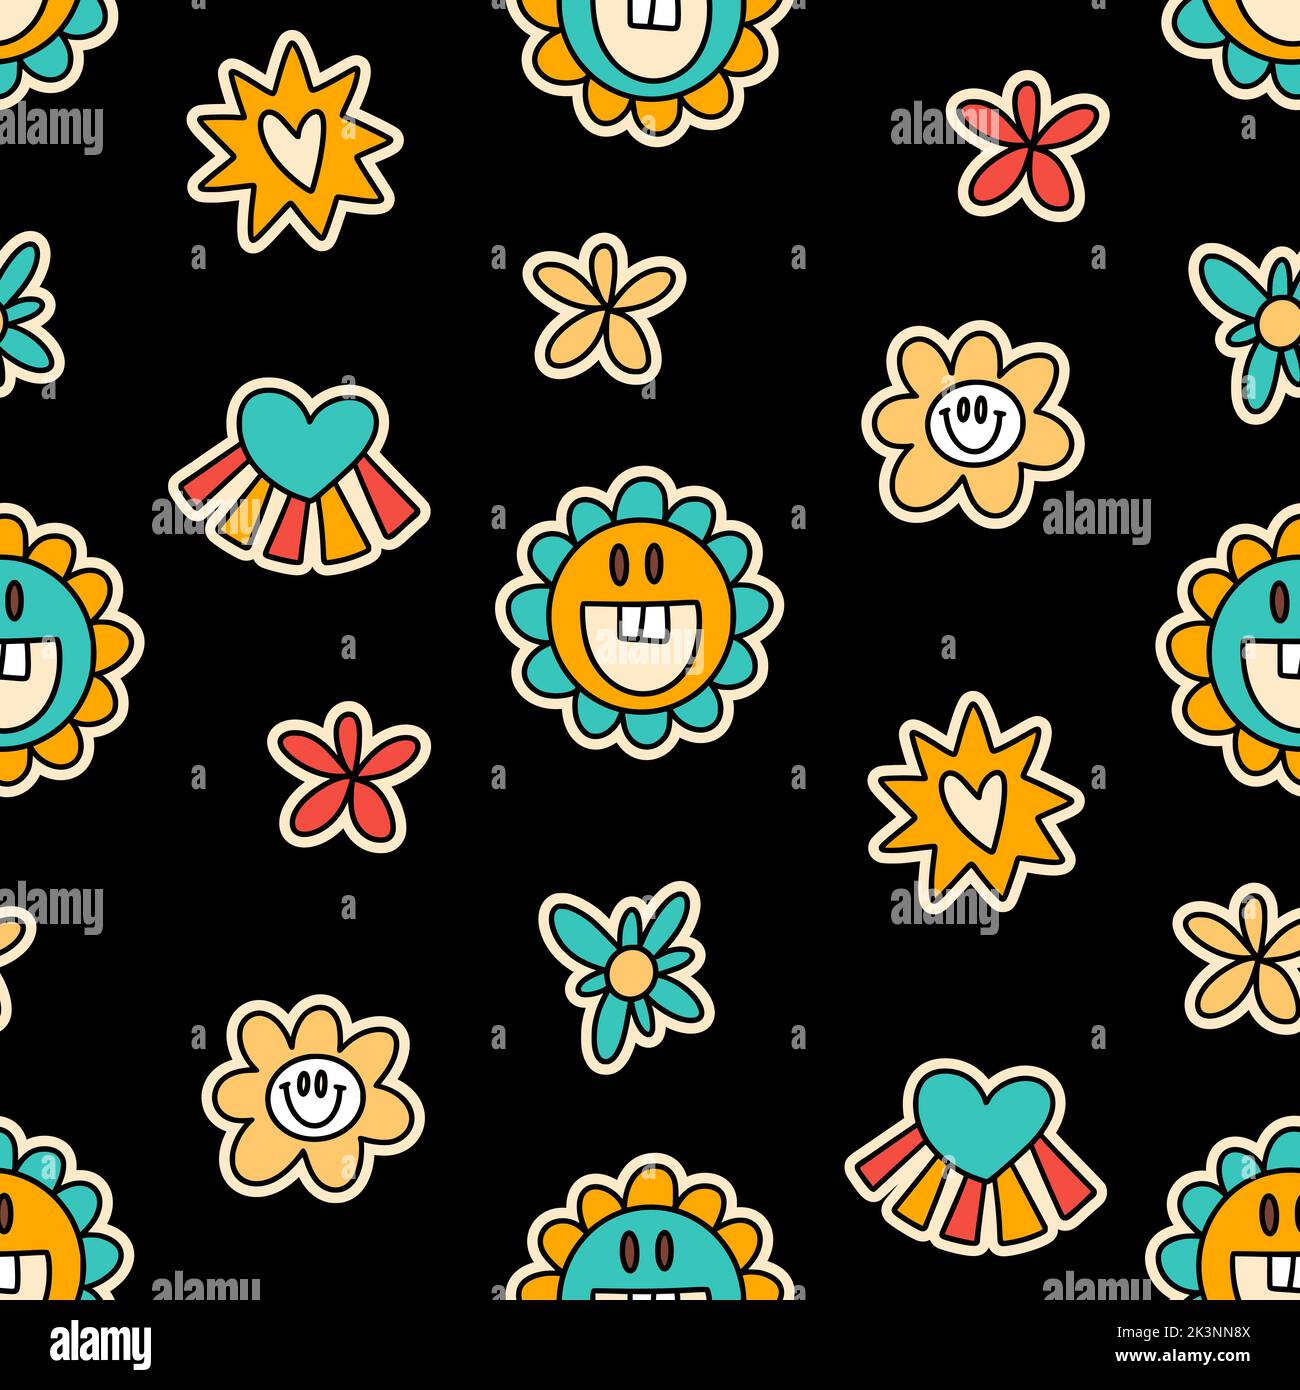 Cute cartoon groovy flower sticker vector seamless pattern. Hippie retro background illustration Stock Vector